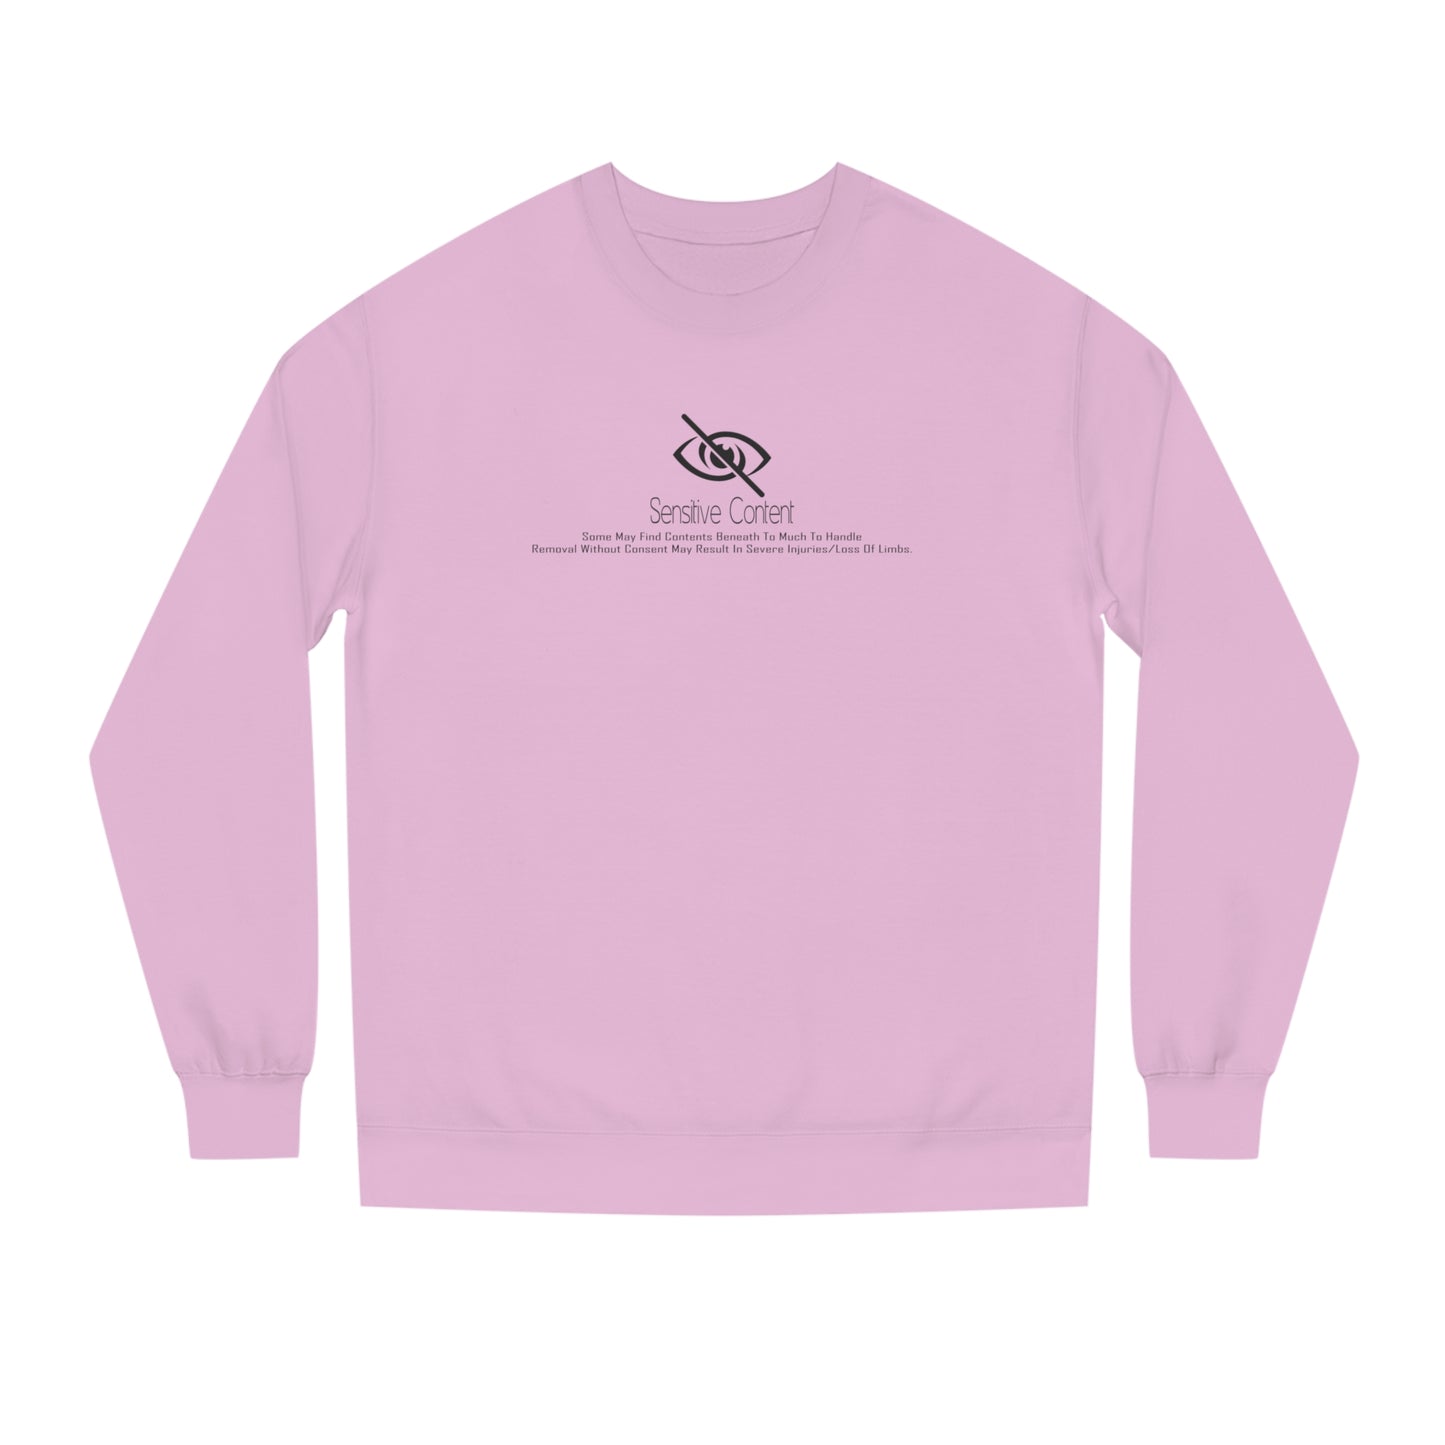 Sensitive Content • Crew Neck Sweatshirt • Print